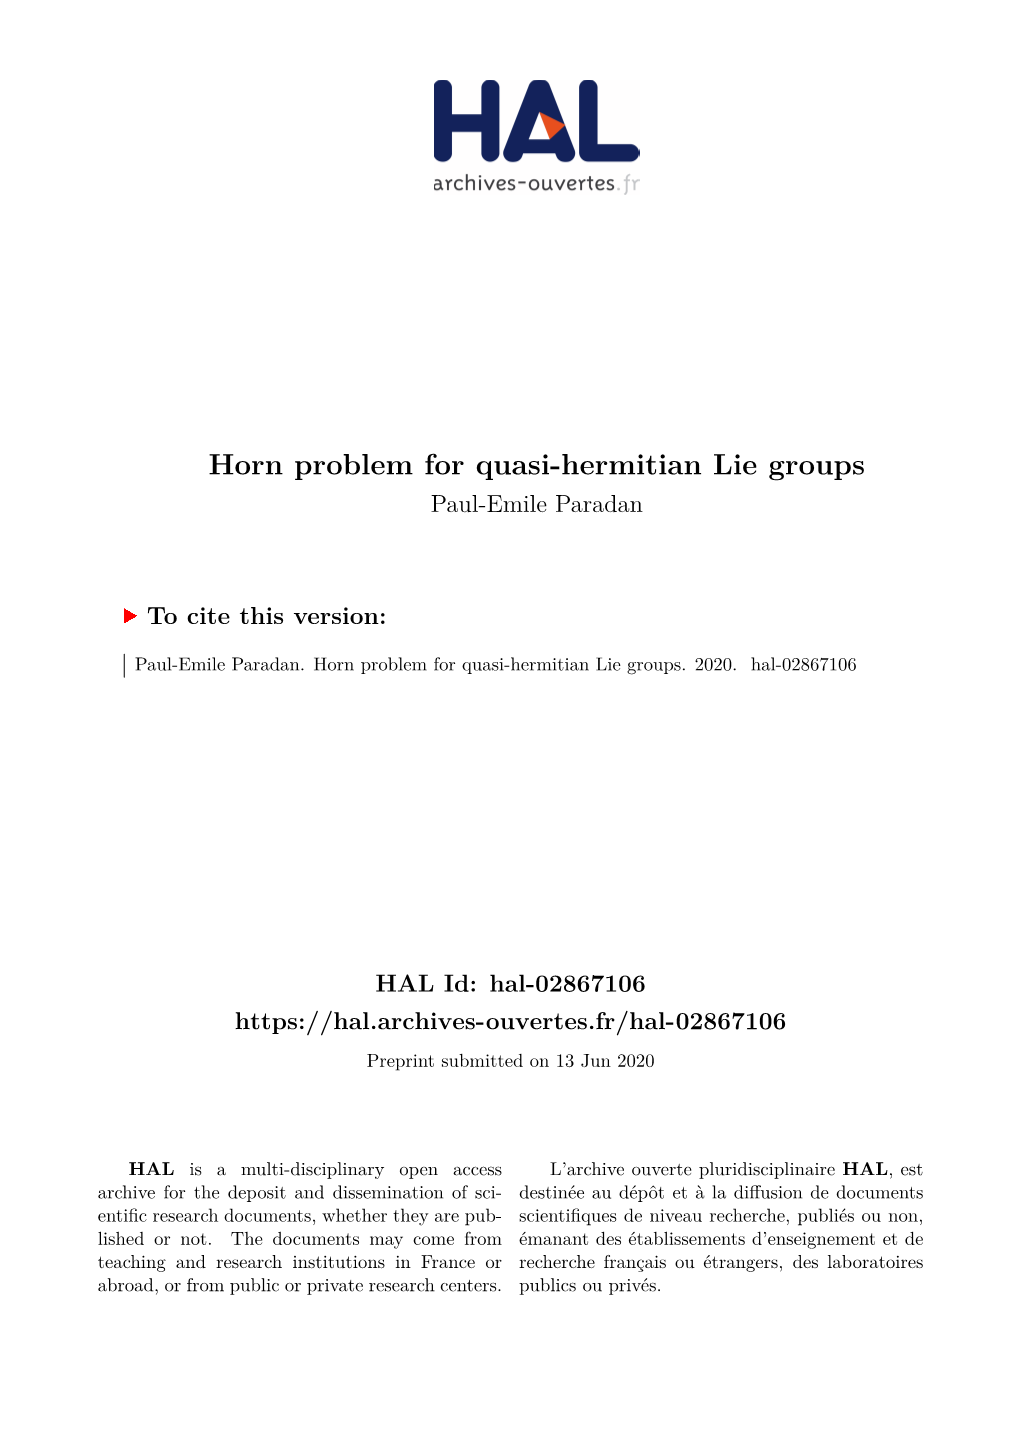 Horn Problem for Quasi-Hermitian Lie Groups Paul-Emile Paradan